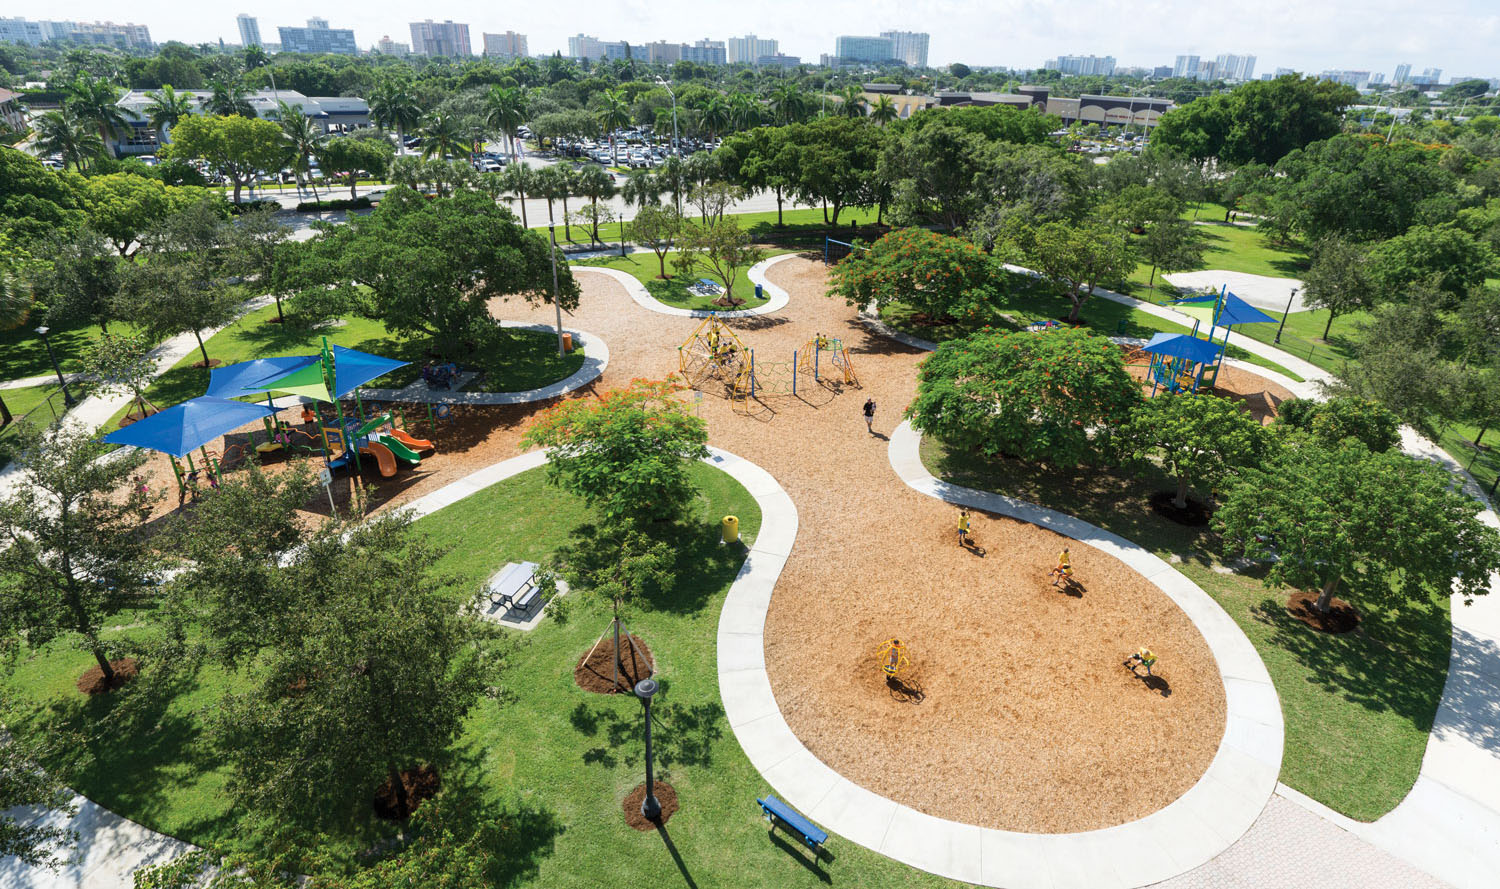 Community Park Playground